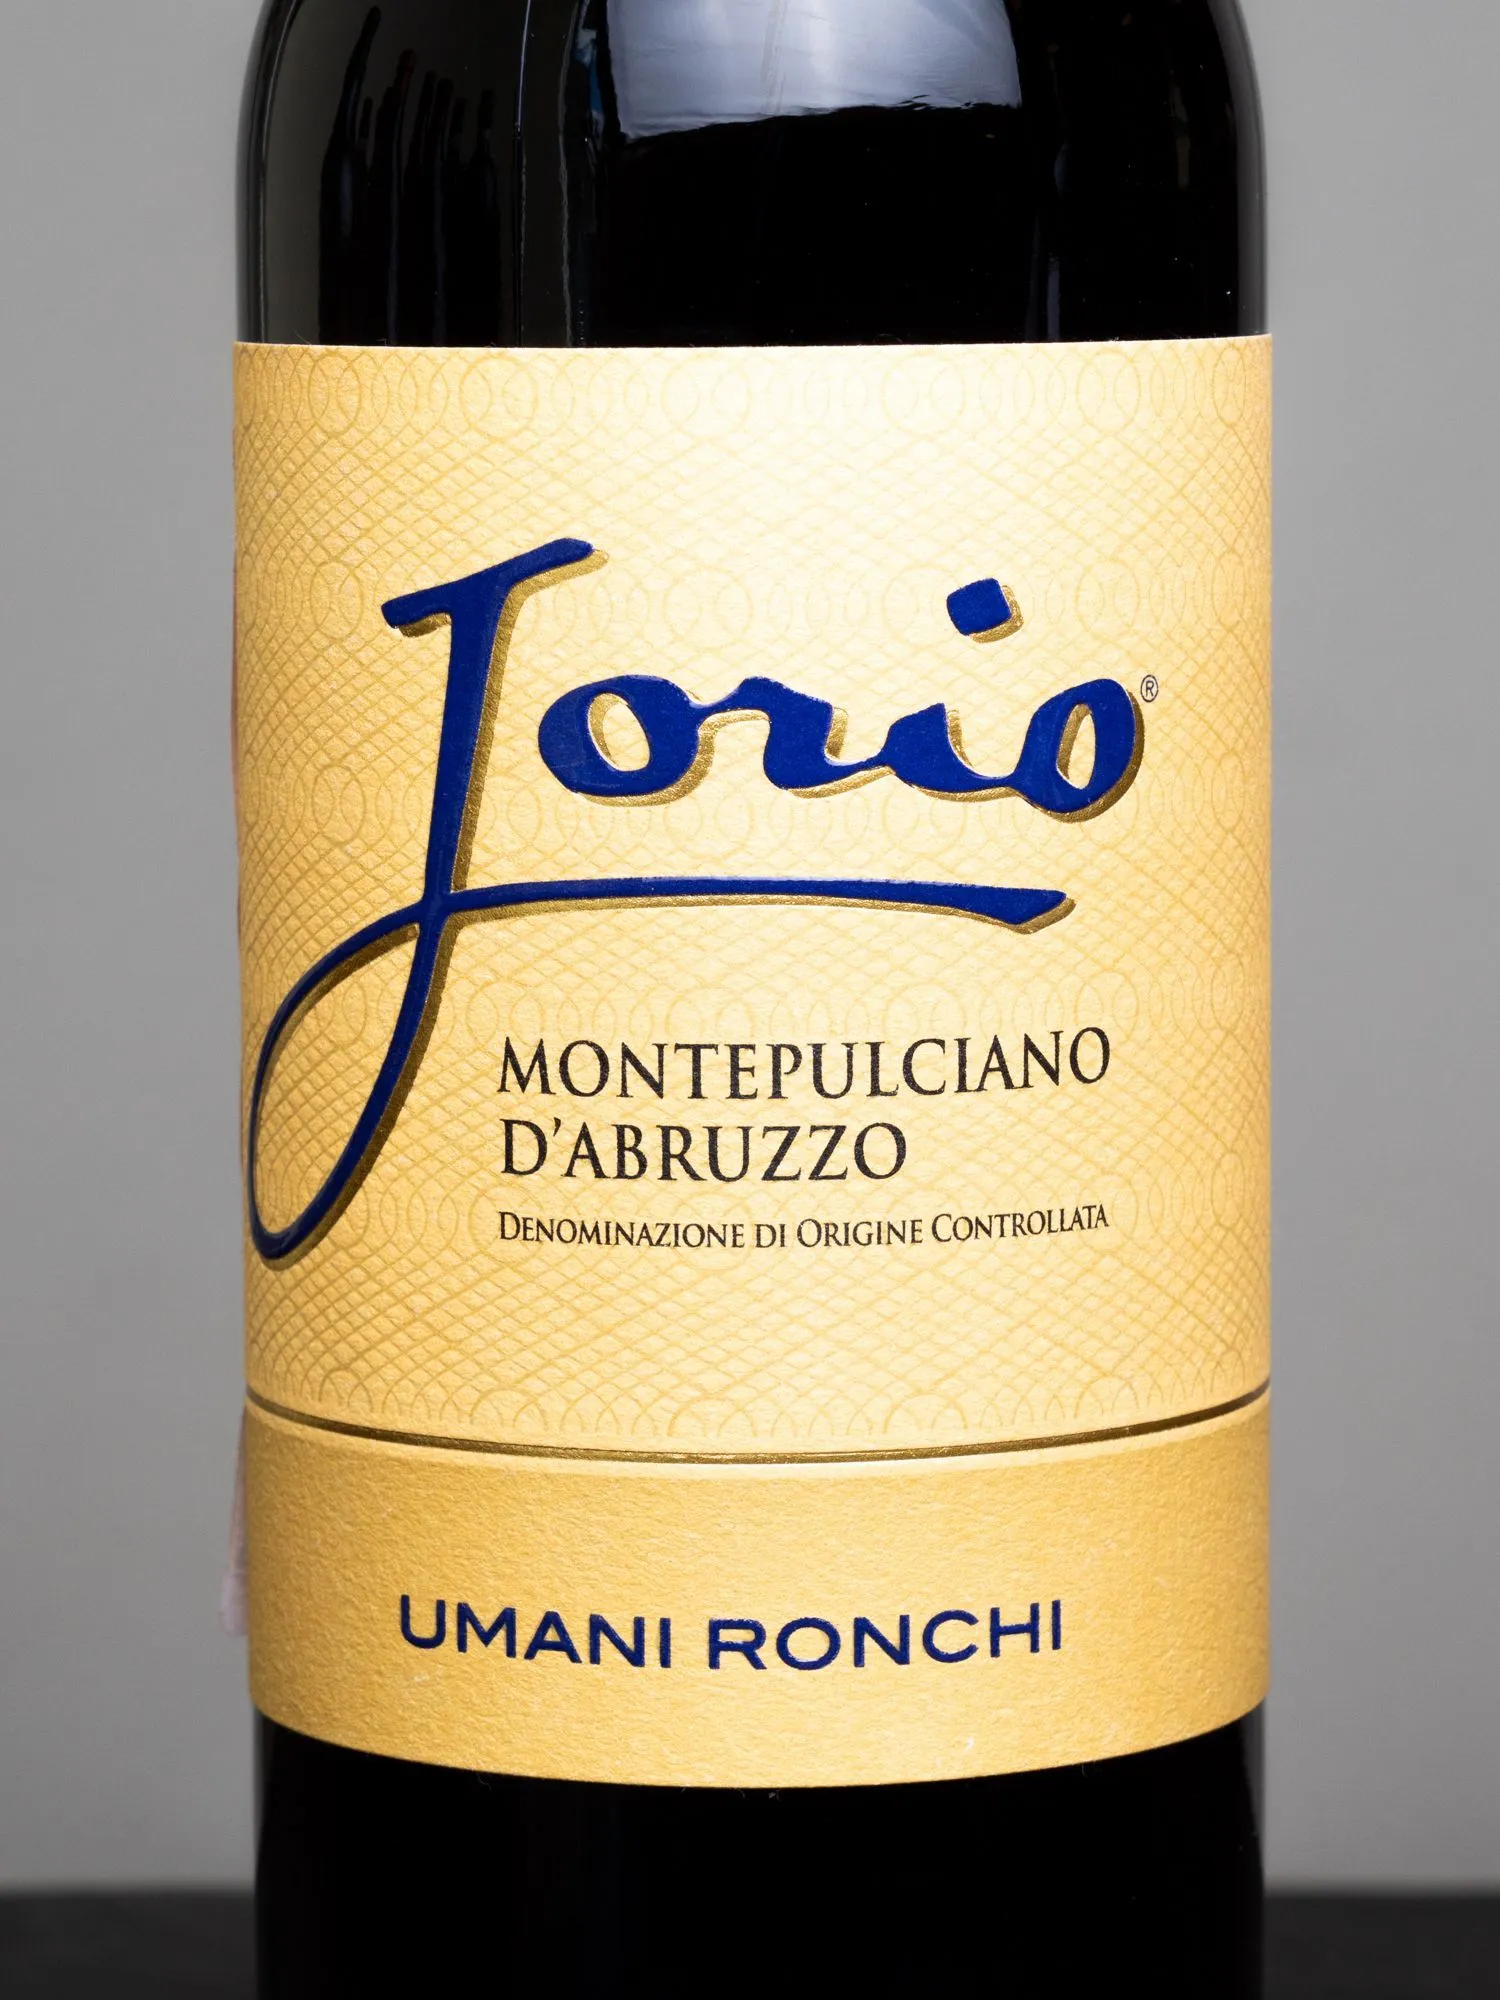 Вино Umani Ronchi Montepulciano dAbruzzo Jorio / Умани Ронки Монтепульчано дАбруццо Йорио